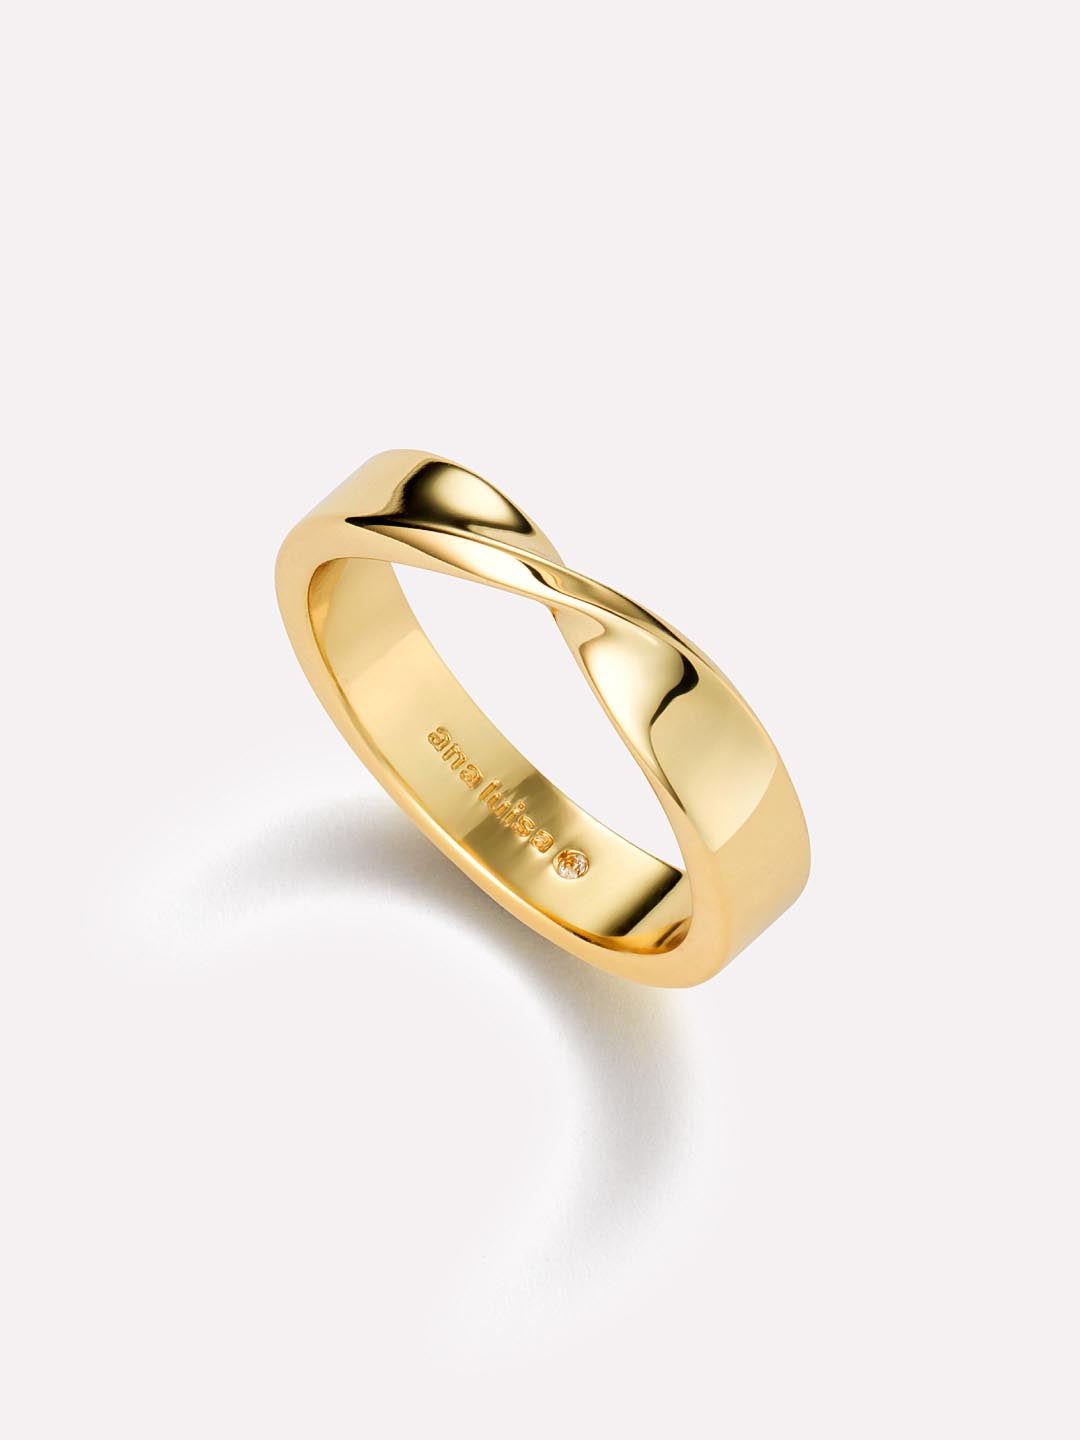 Gold Band Ring - Gold Diamond Eternity Ring, Ana Luisa